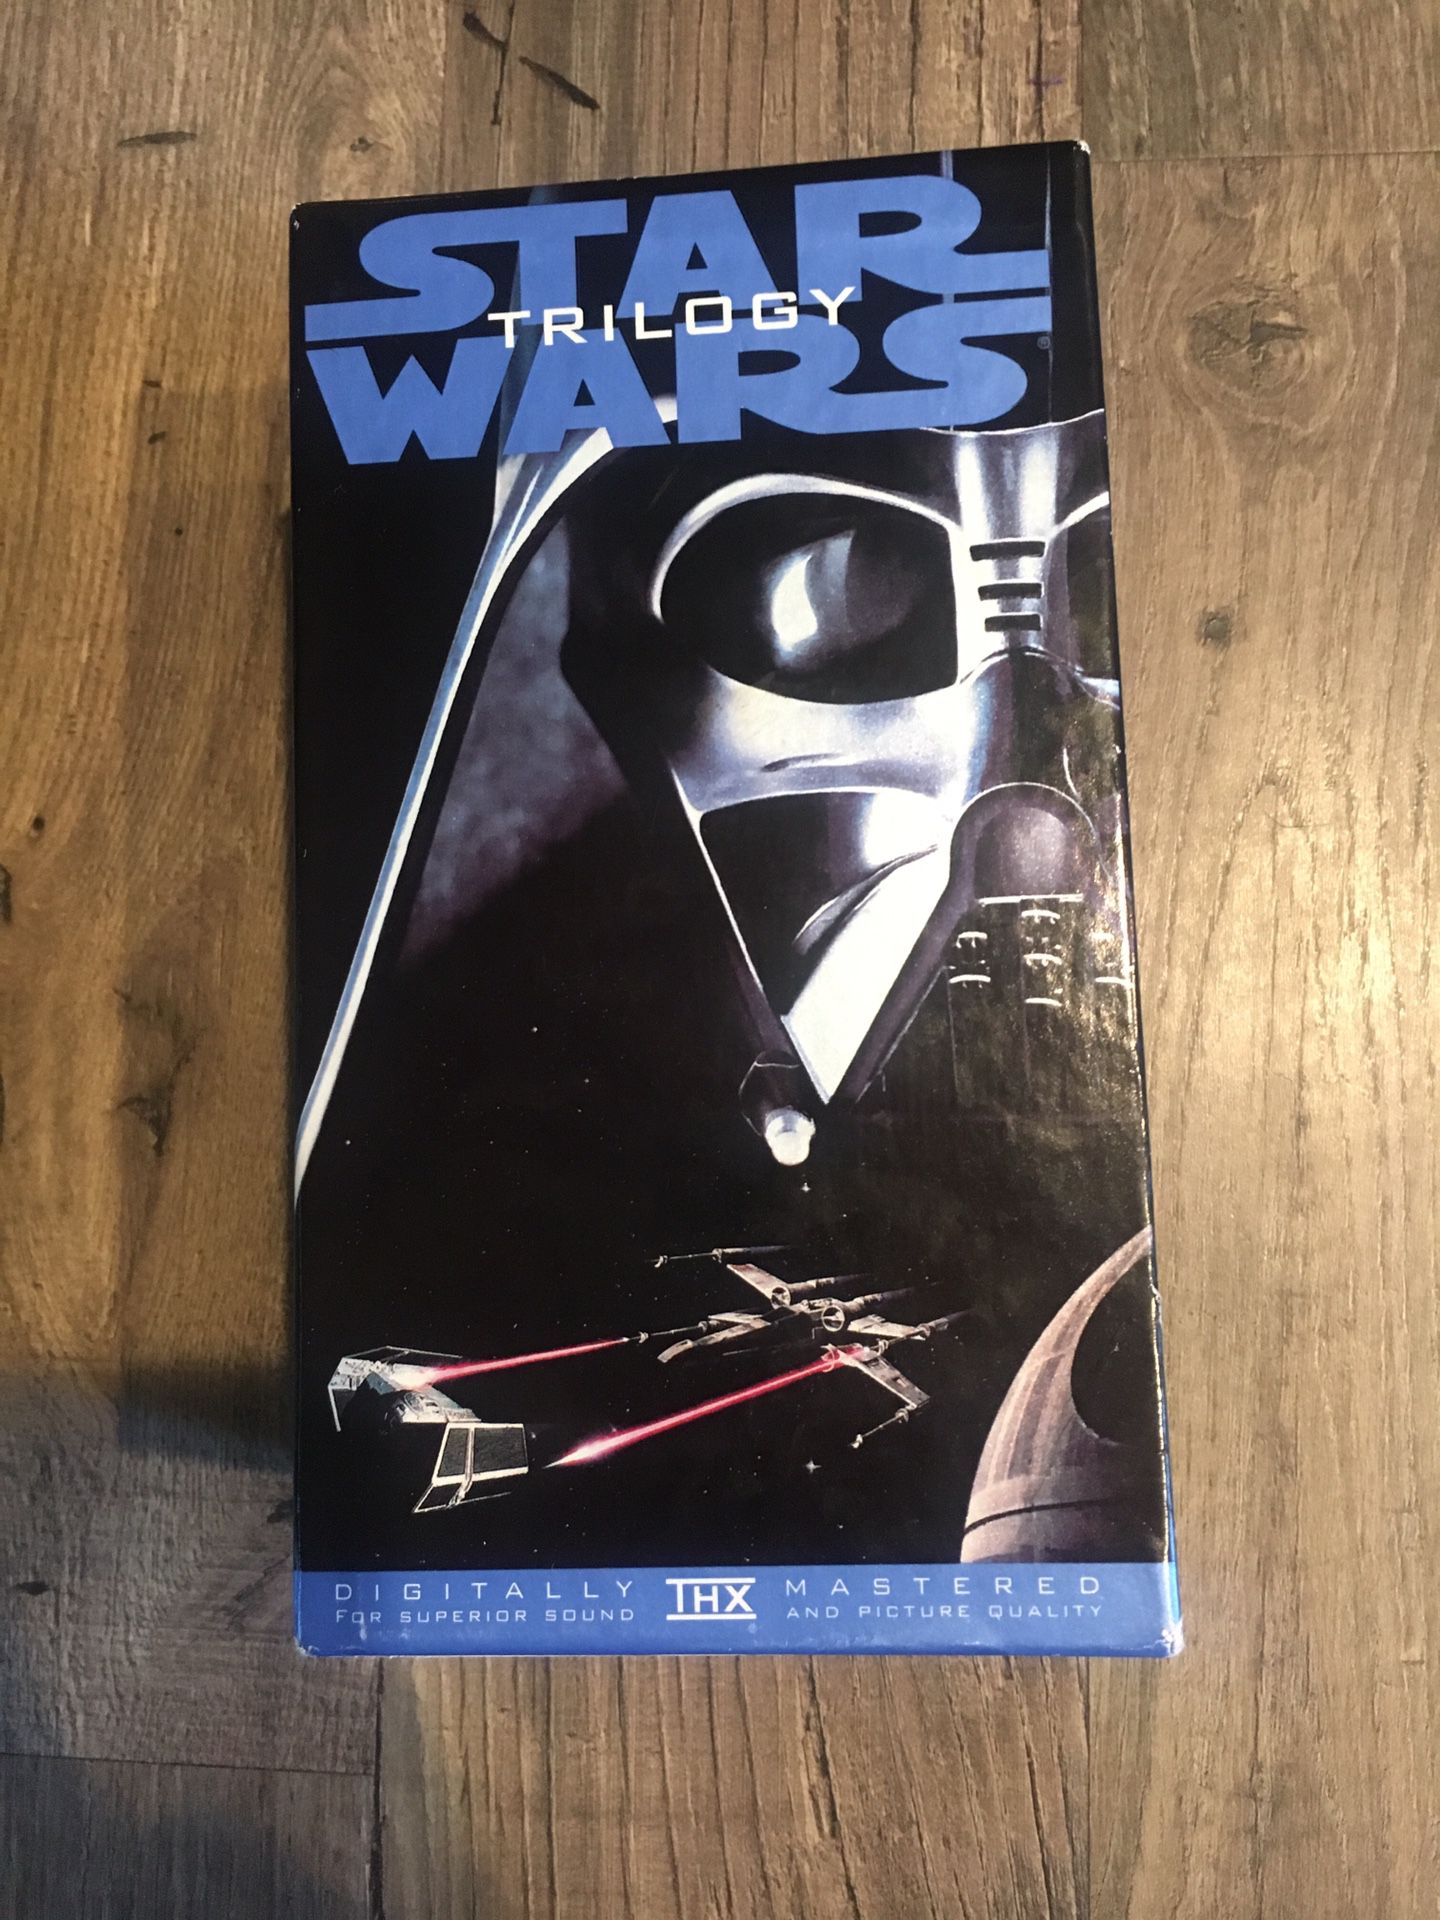 Star Wars VHS Trilogy